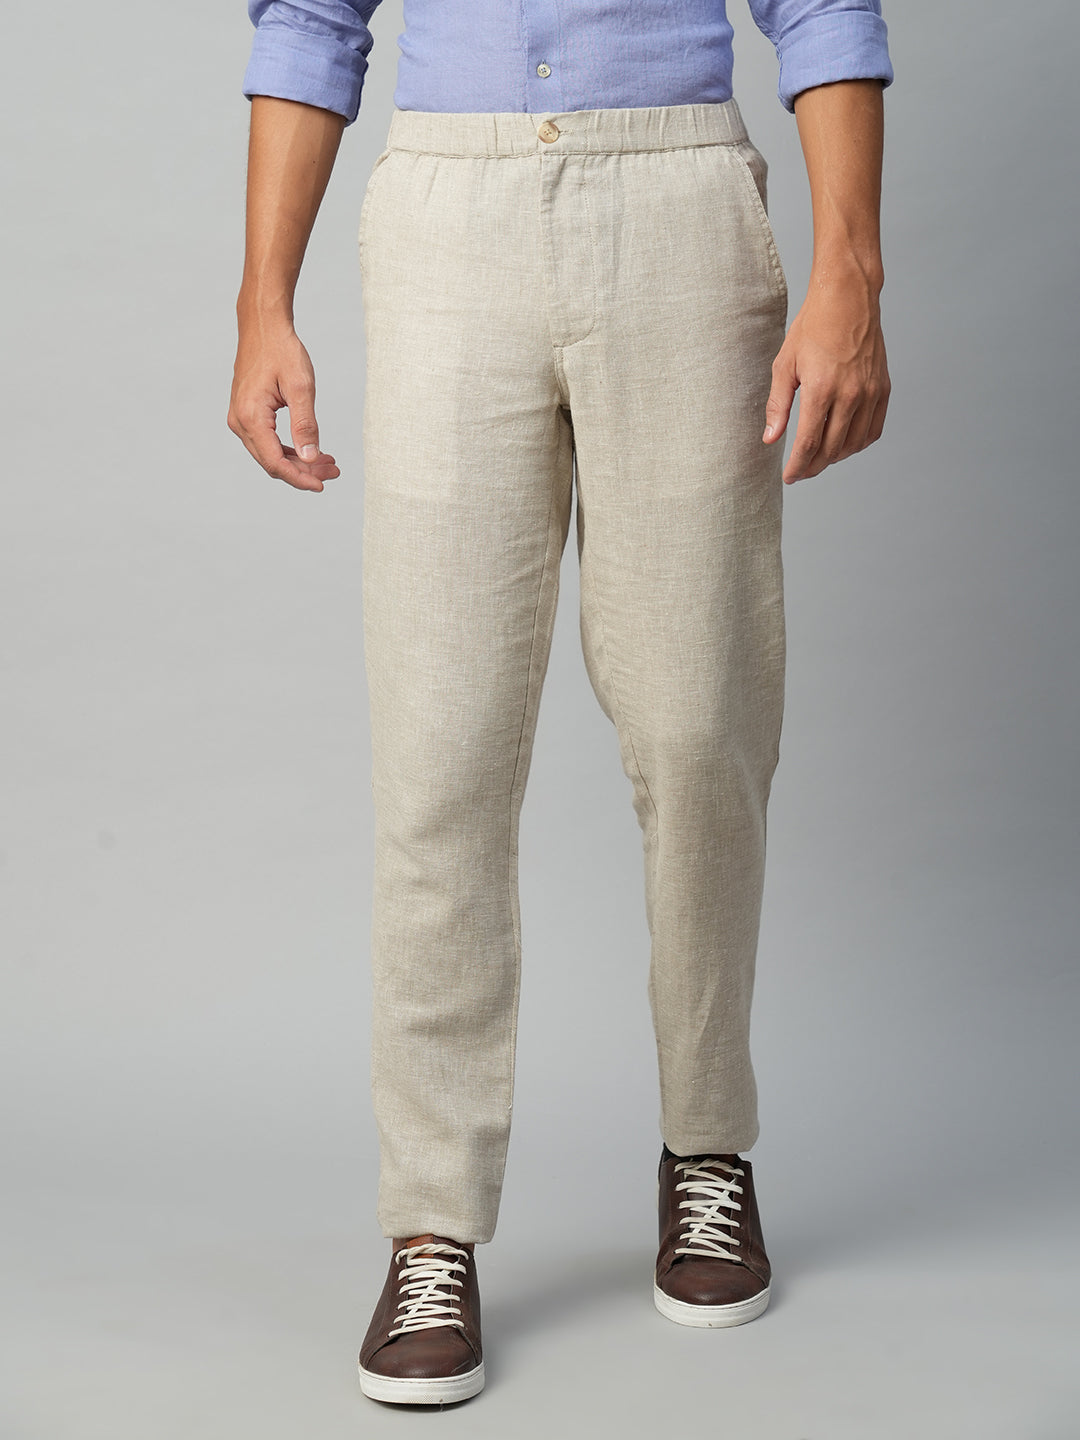 Men's Natural Cotton Linen Regular Fit Draw String Pant